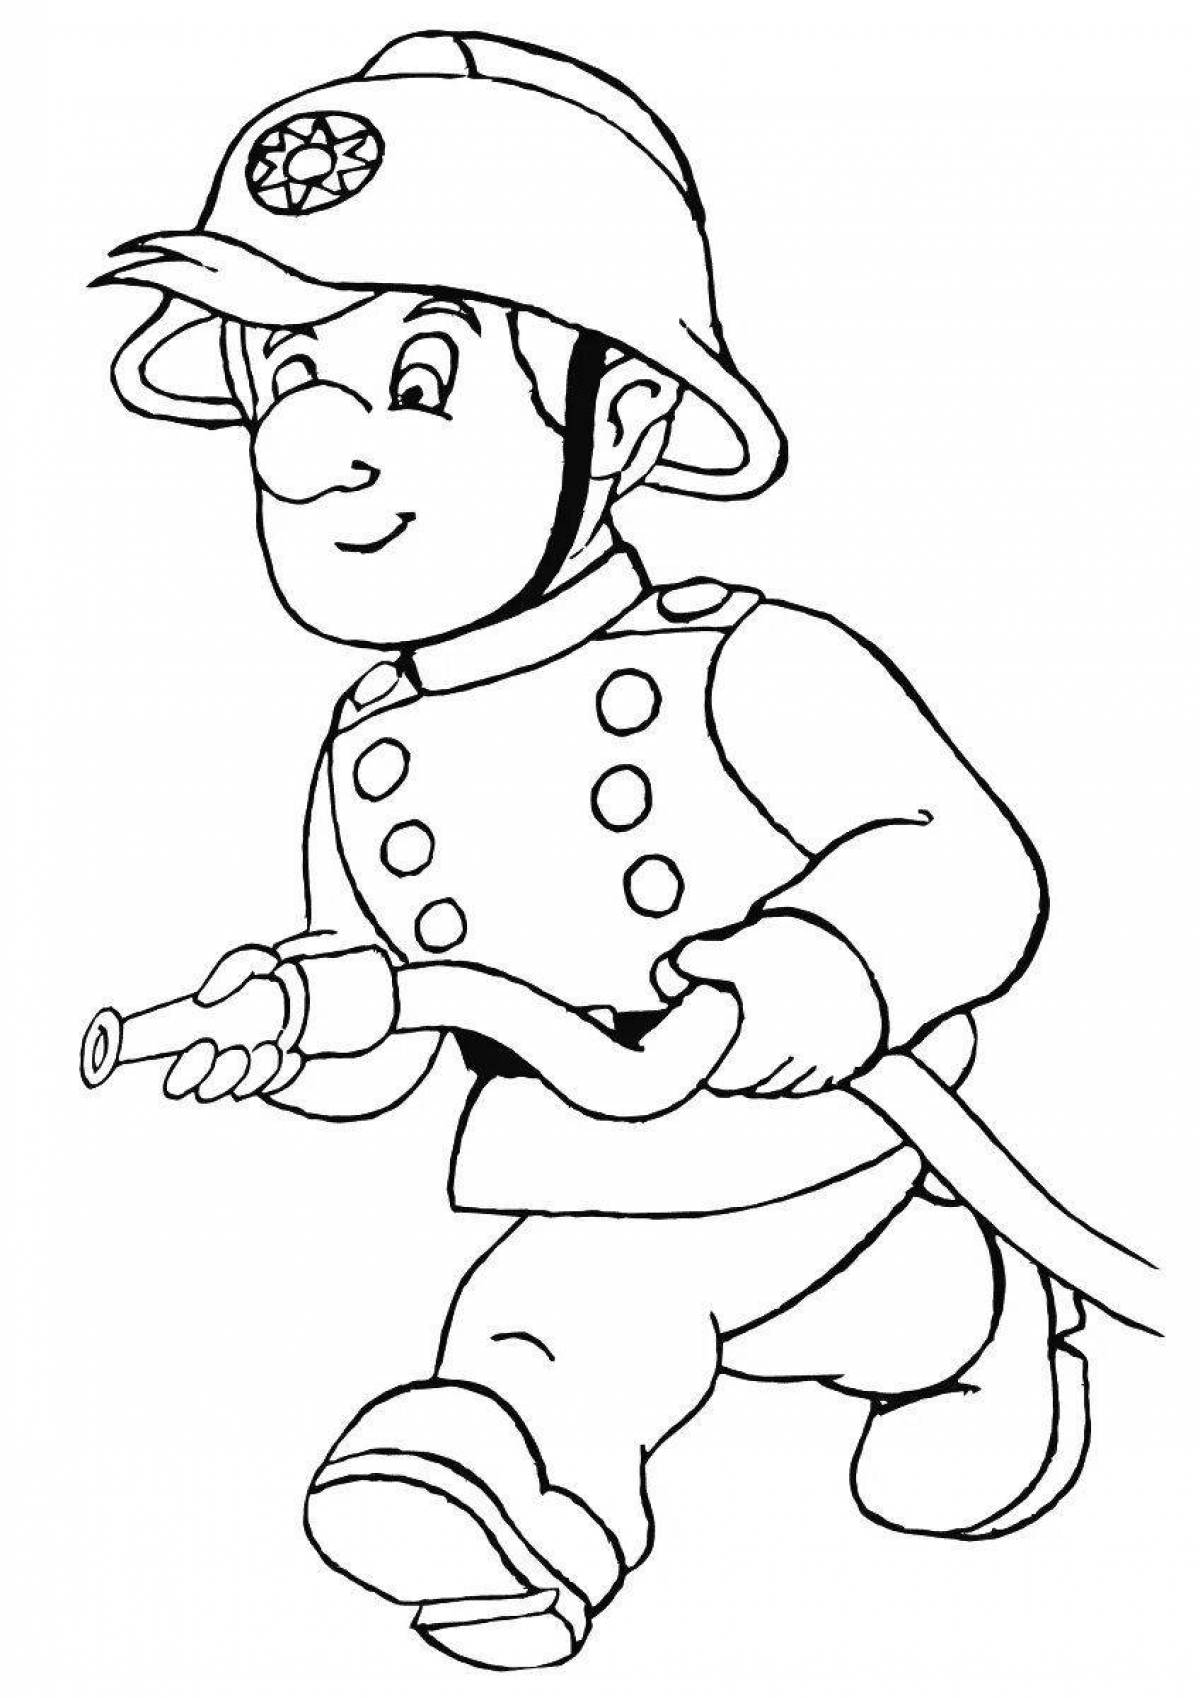 Wonderful fireman coloring for kids